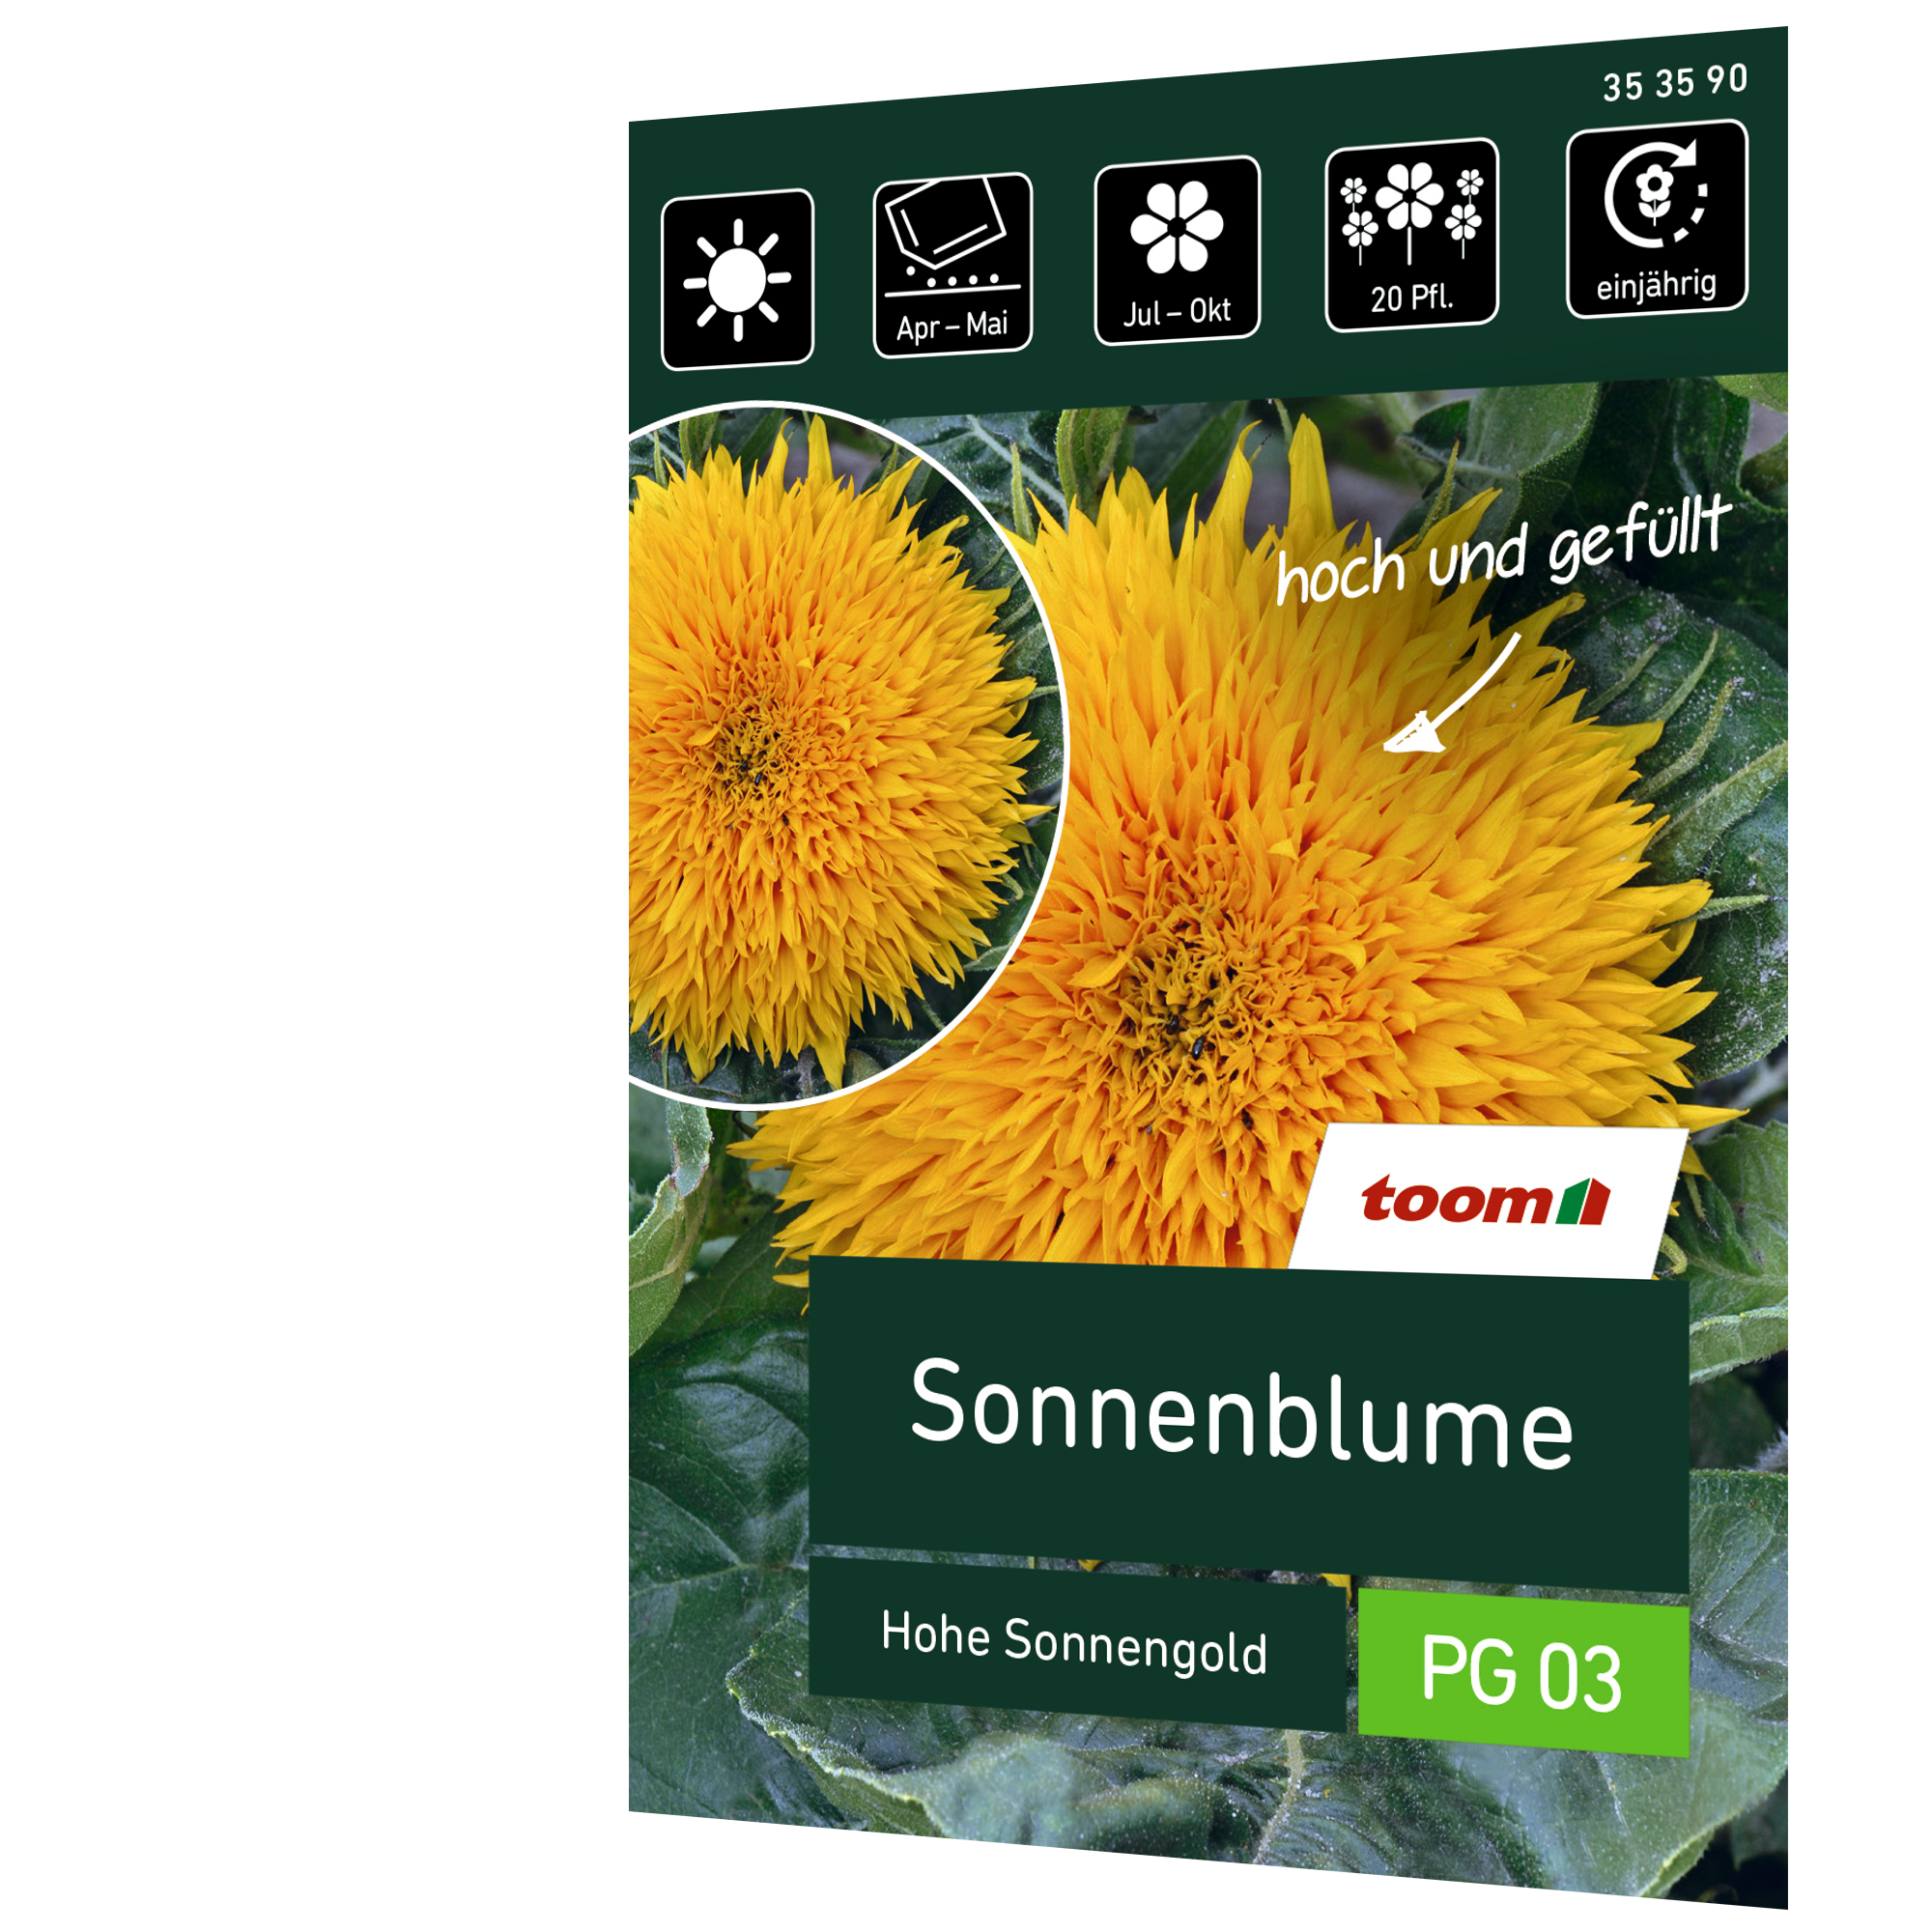 Sonnenblume 'Hohe Sonnengold' + product picture